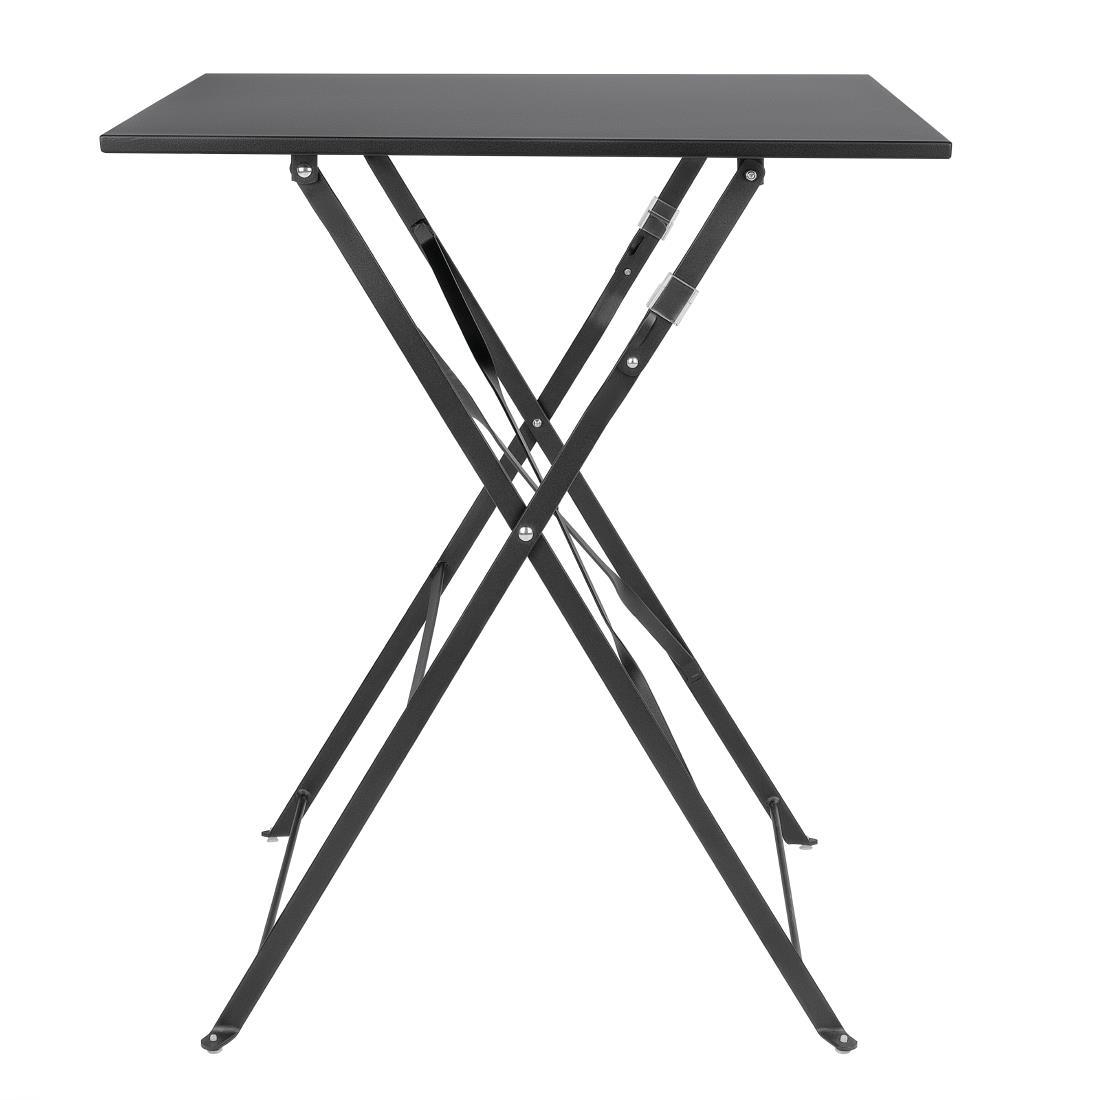 Bolero Black Square Pavement Style Steel Table - GK989  - 2